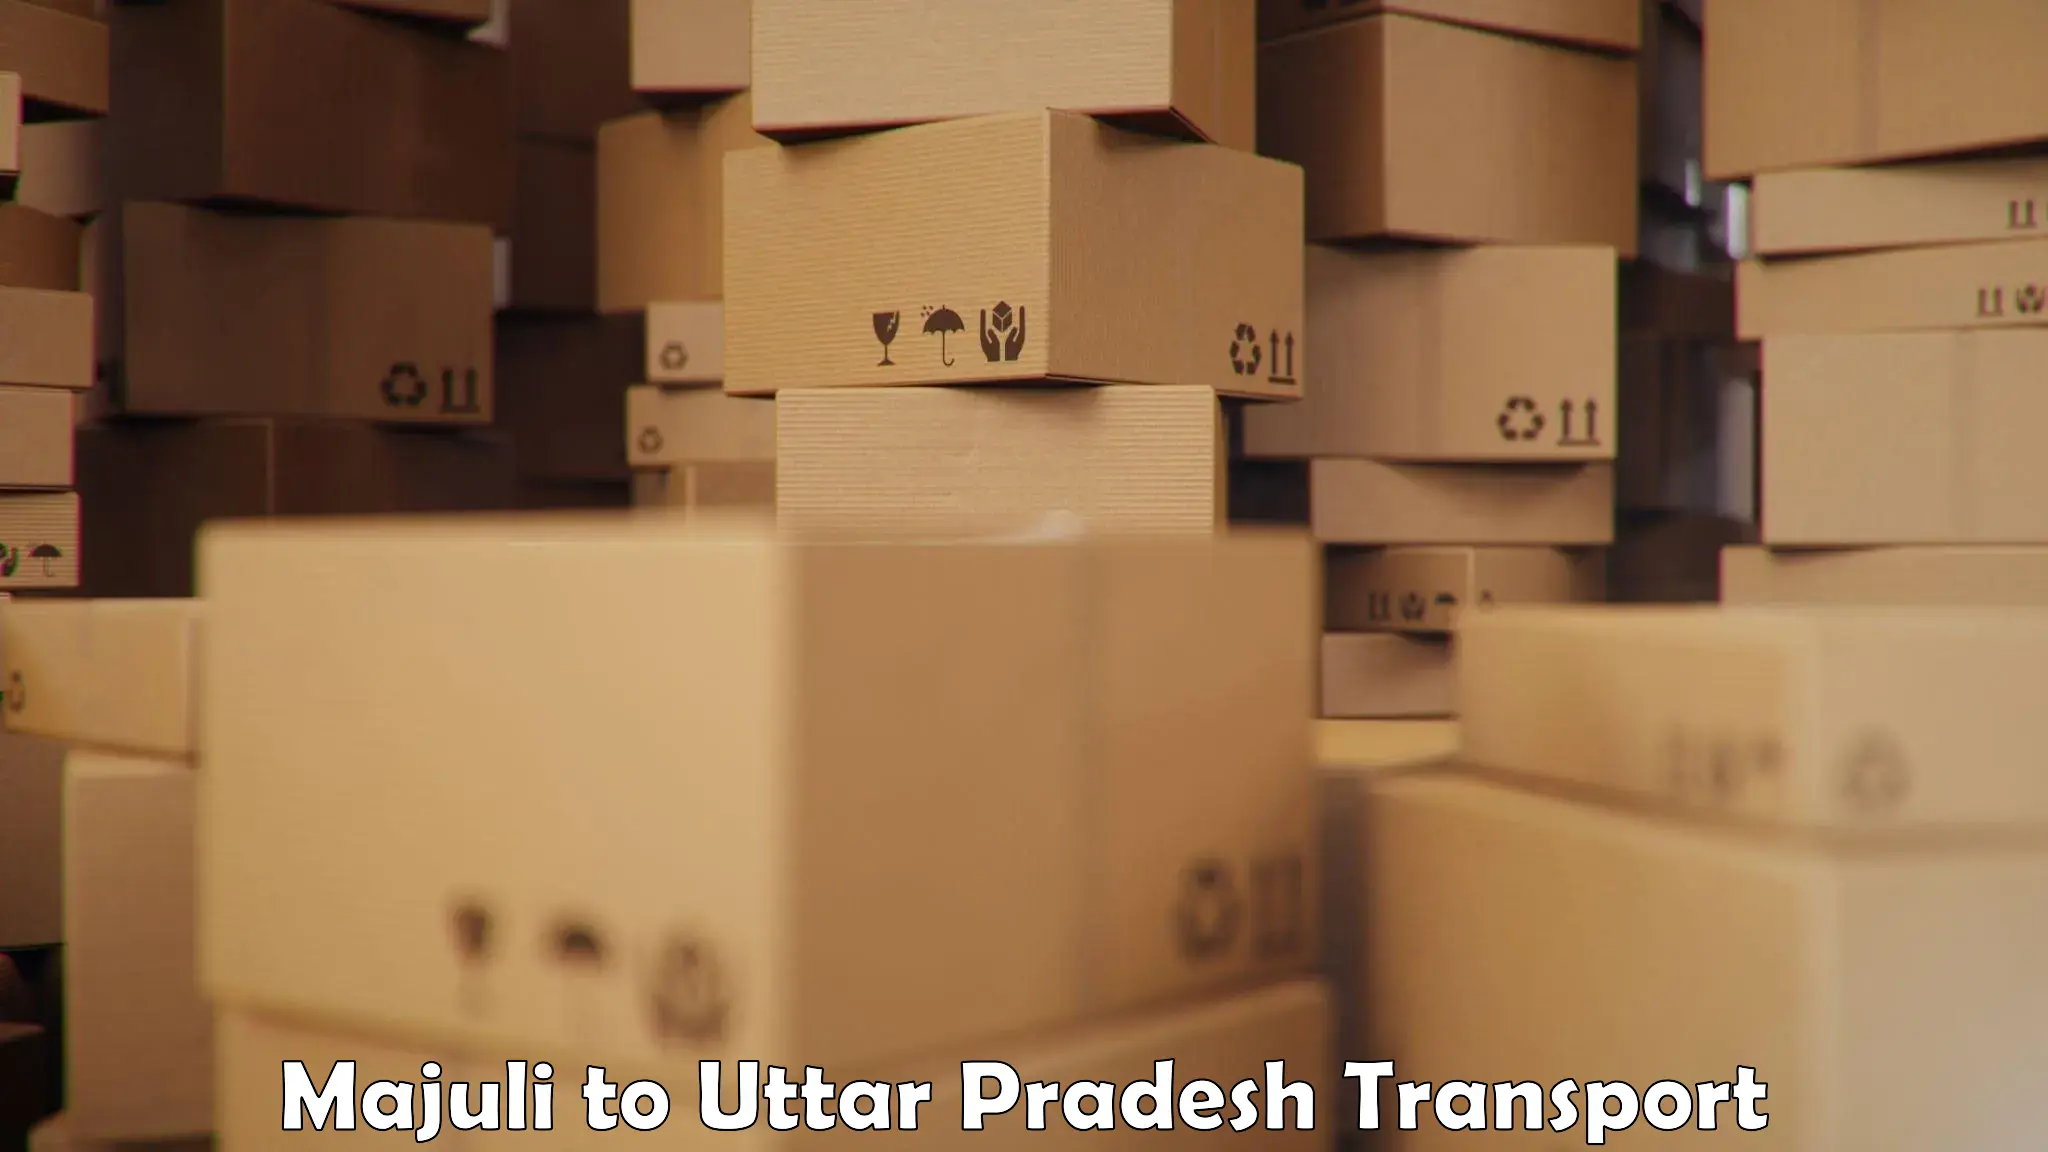 Truck transport companies in India Majuli to Orai